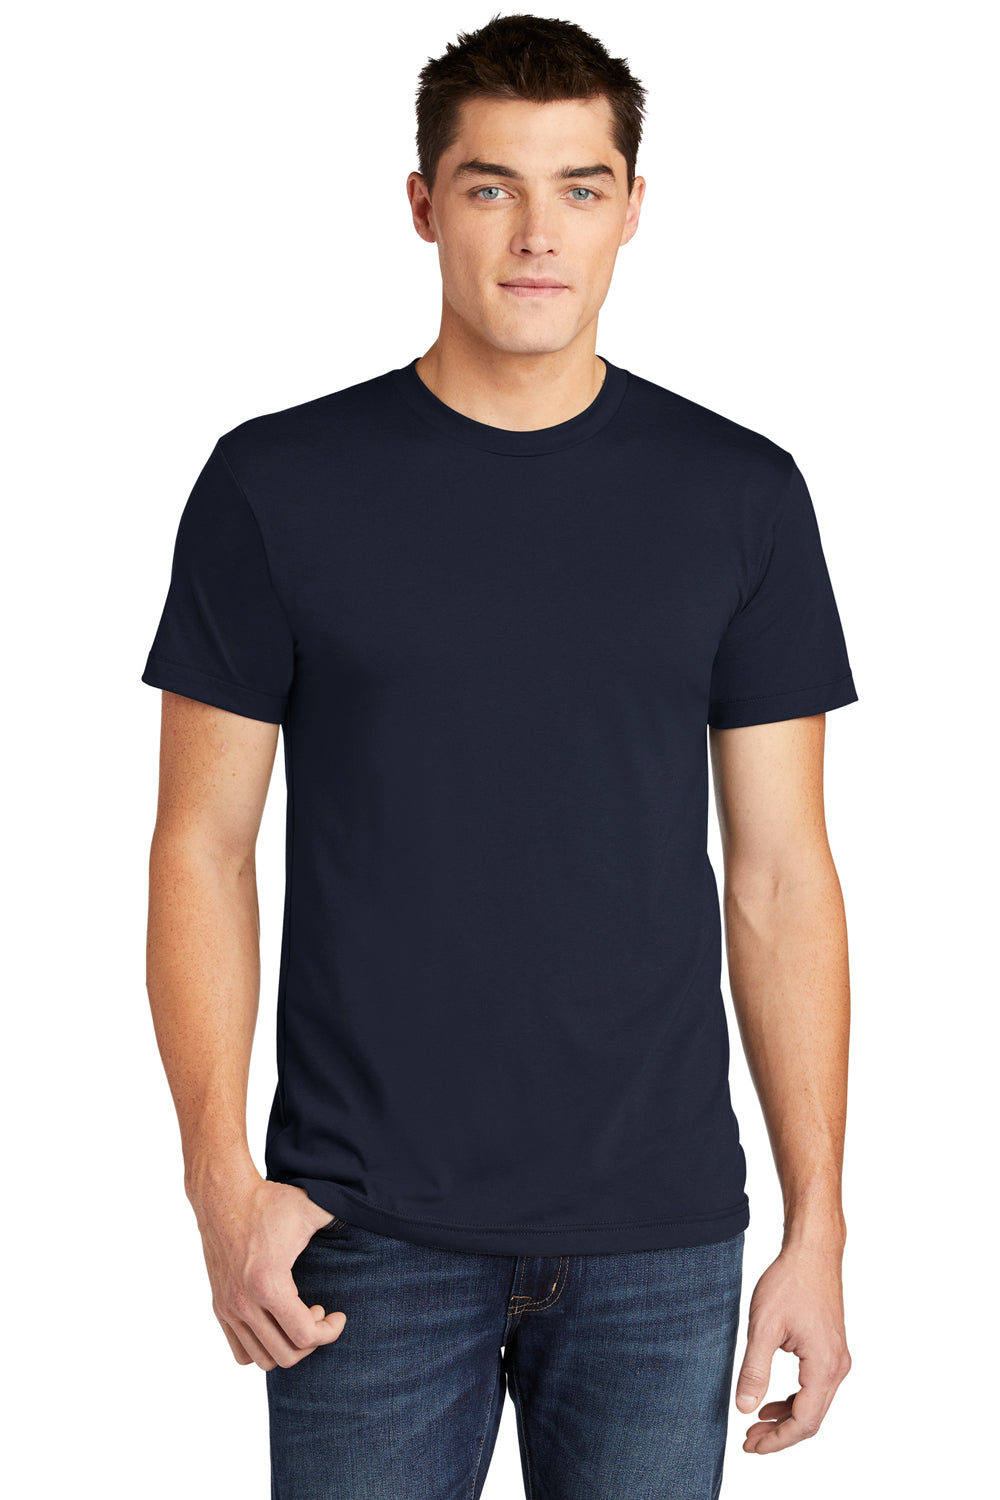 American Apparel BB401W Mens Short Sleeve Crewneck T-Shirt Navy Blue Front